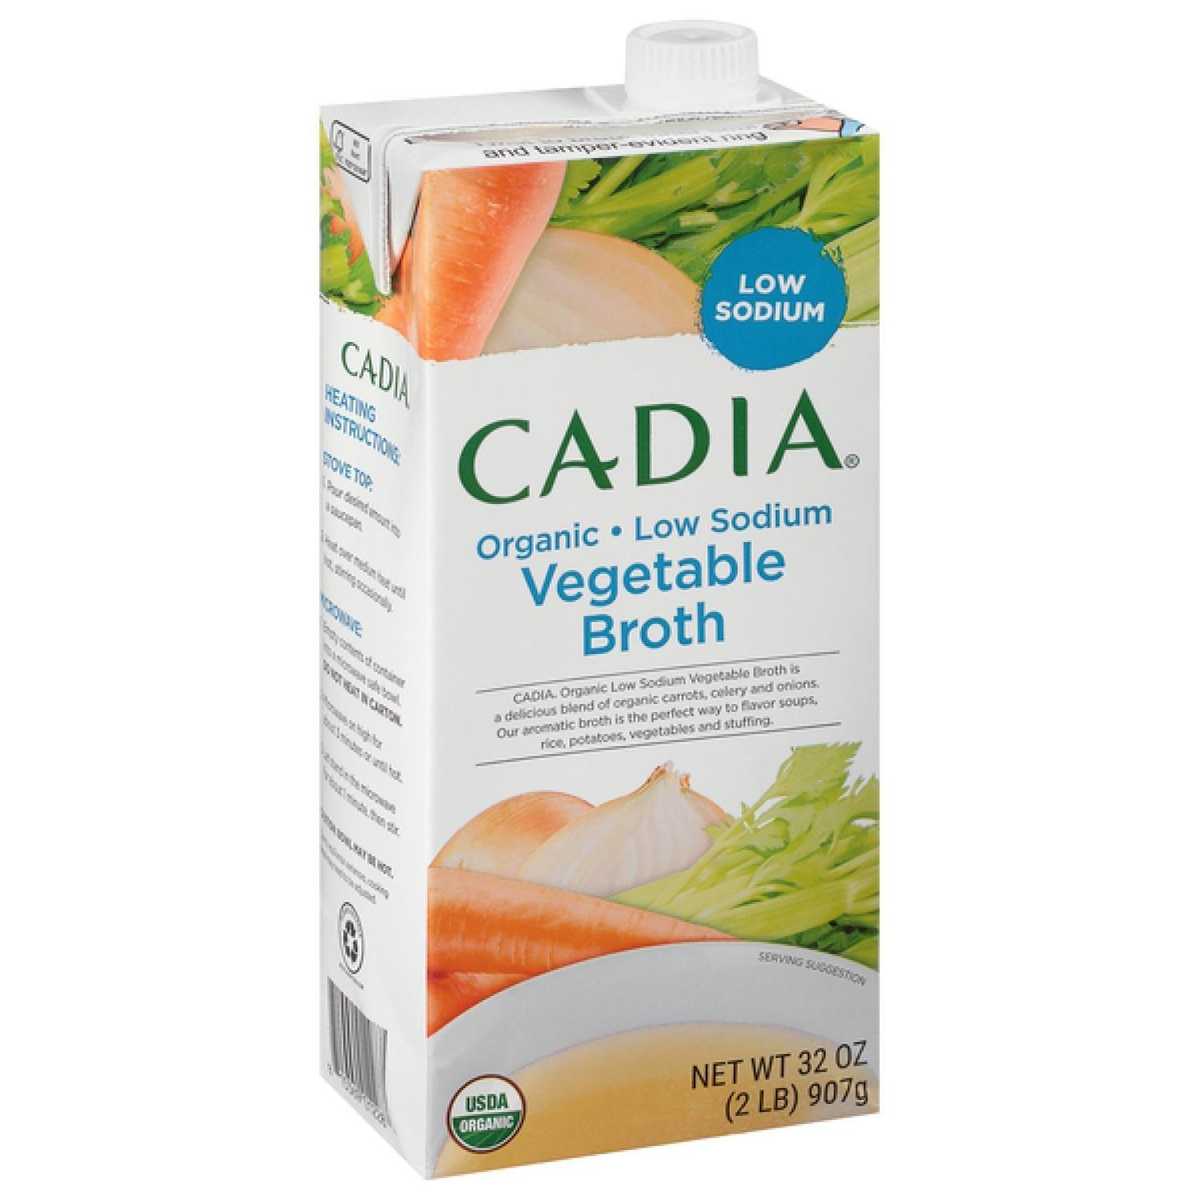 Cadia Organic Carrot Coconut Soup, 14.1 oz.